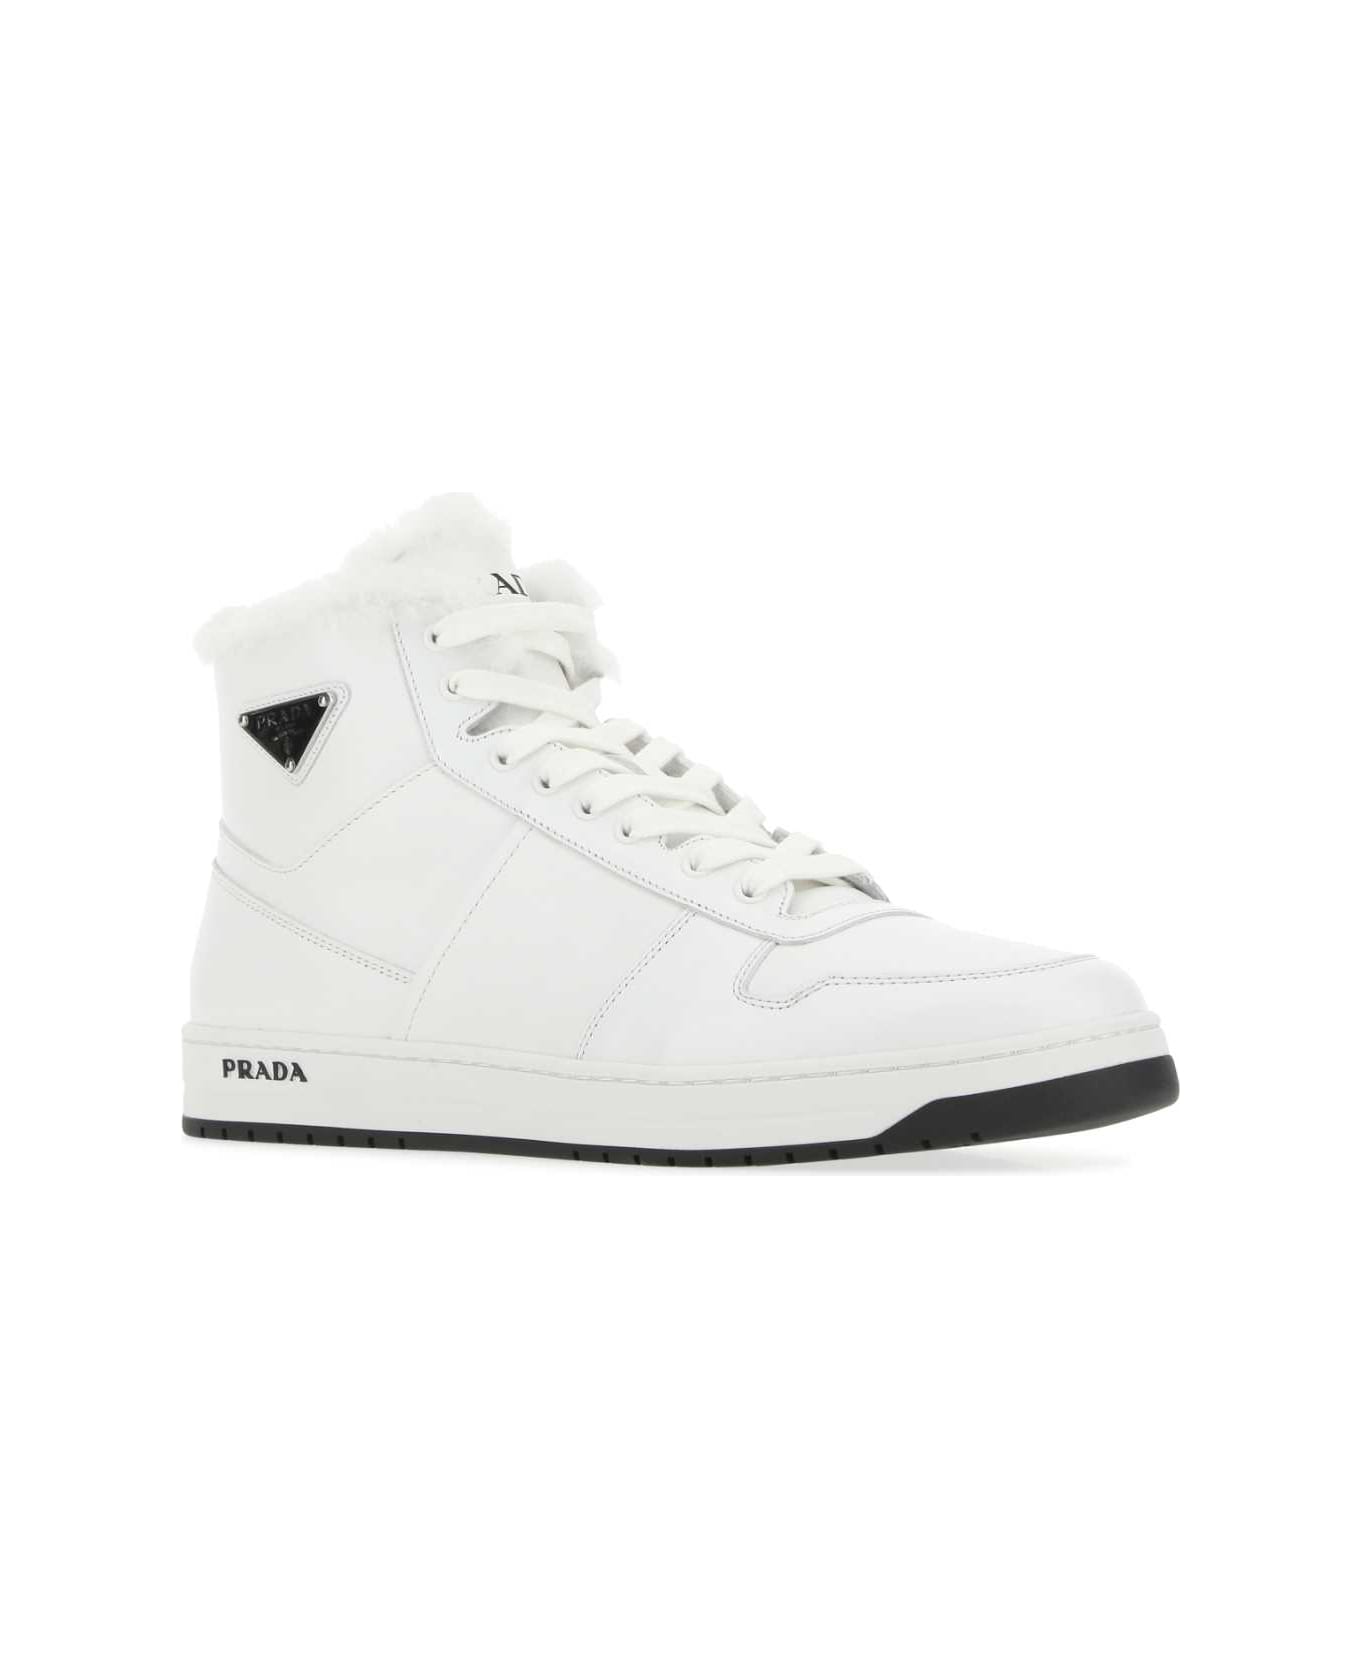 Prada White Leather Sneakers - F0009